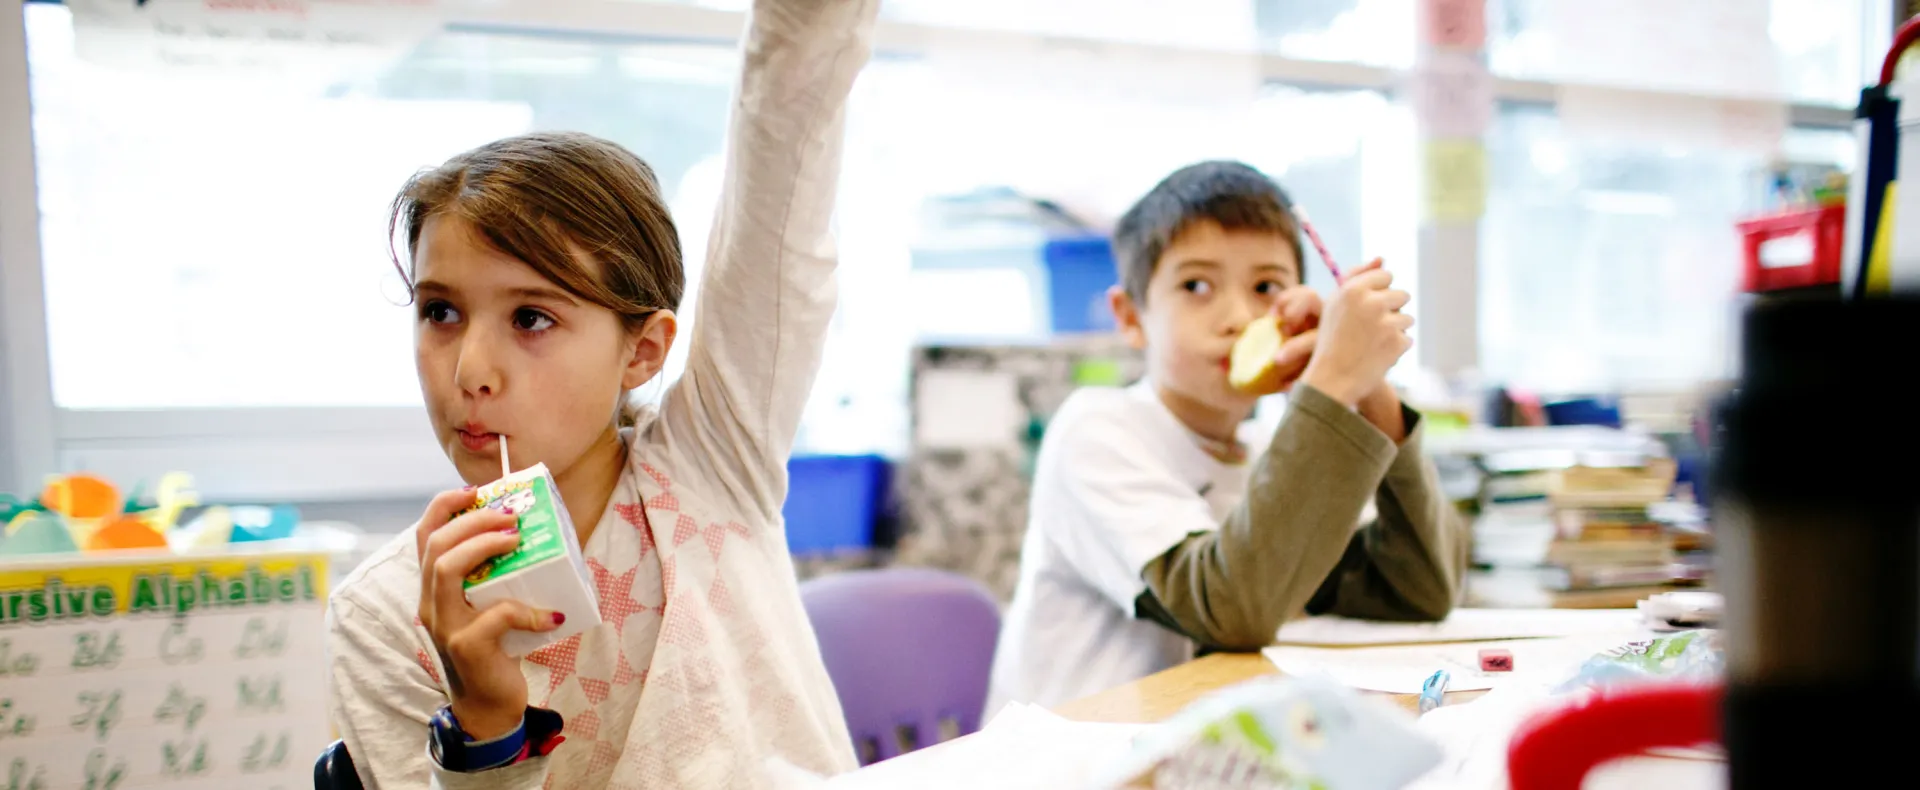 Children eating breakfast at desks and raising their hands